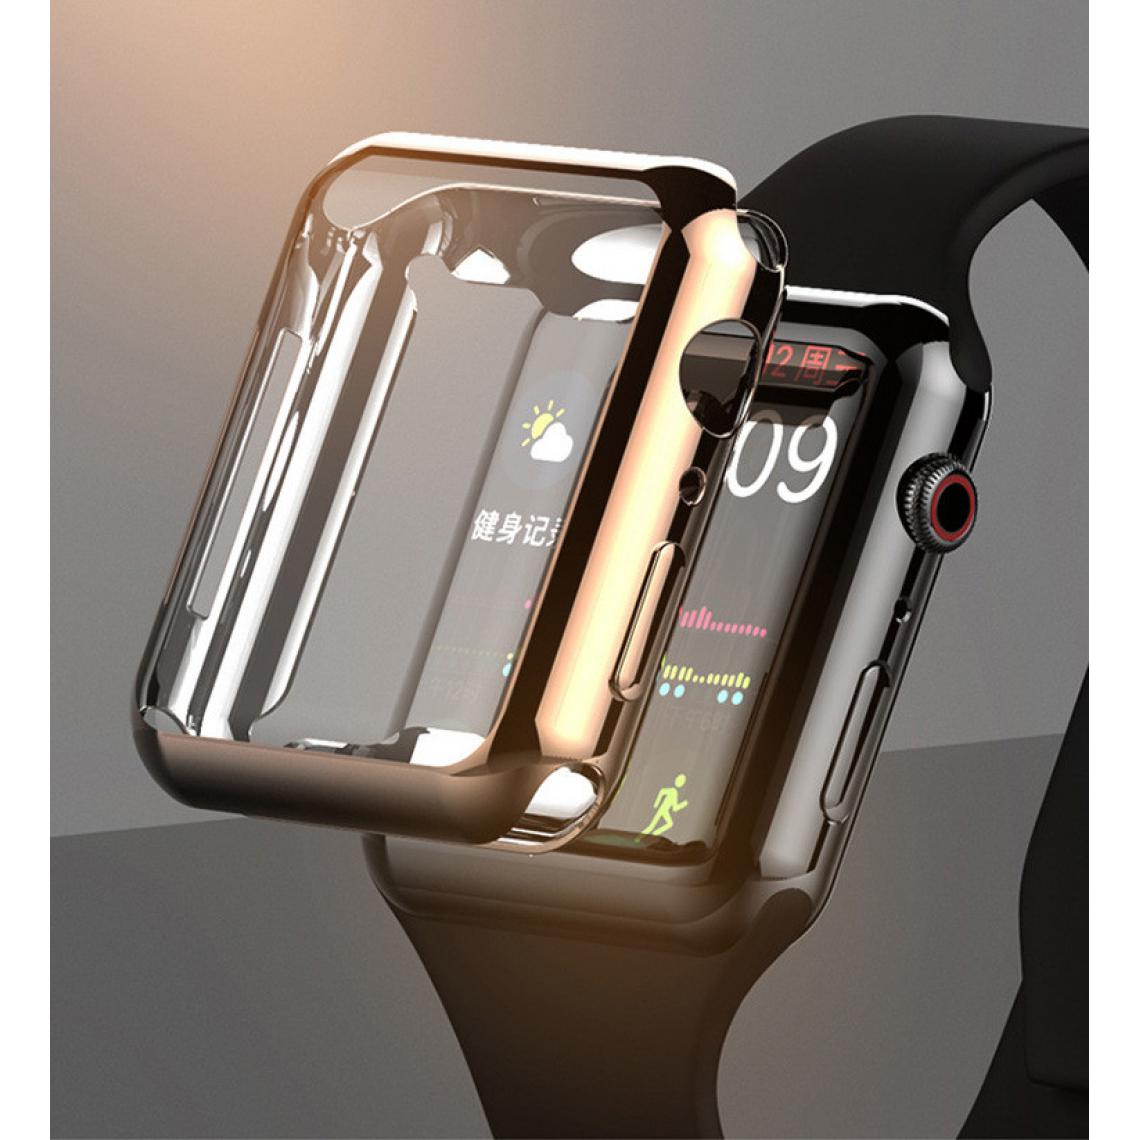 Shot - Coque Silicone 44mm pour IWATCH Serie 2 APPLE Bumper Protection Tactile (OR) - Accessoires montres connectées